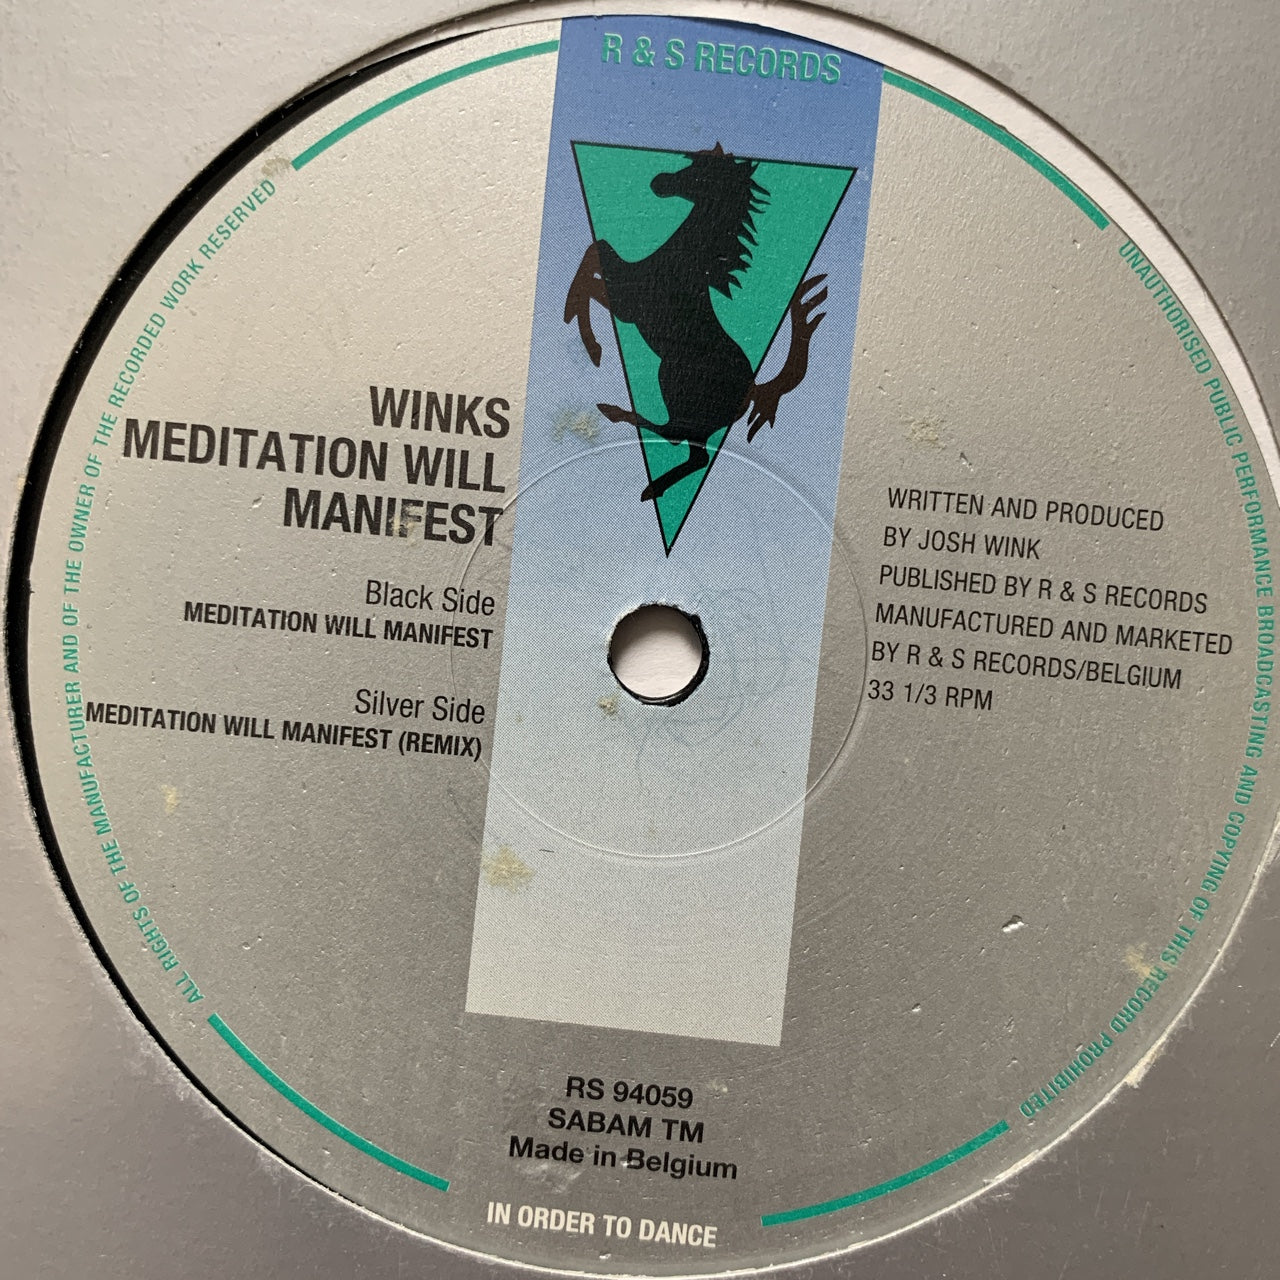 Winks “The Meditation Will Manifest”